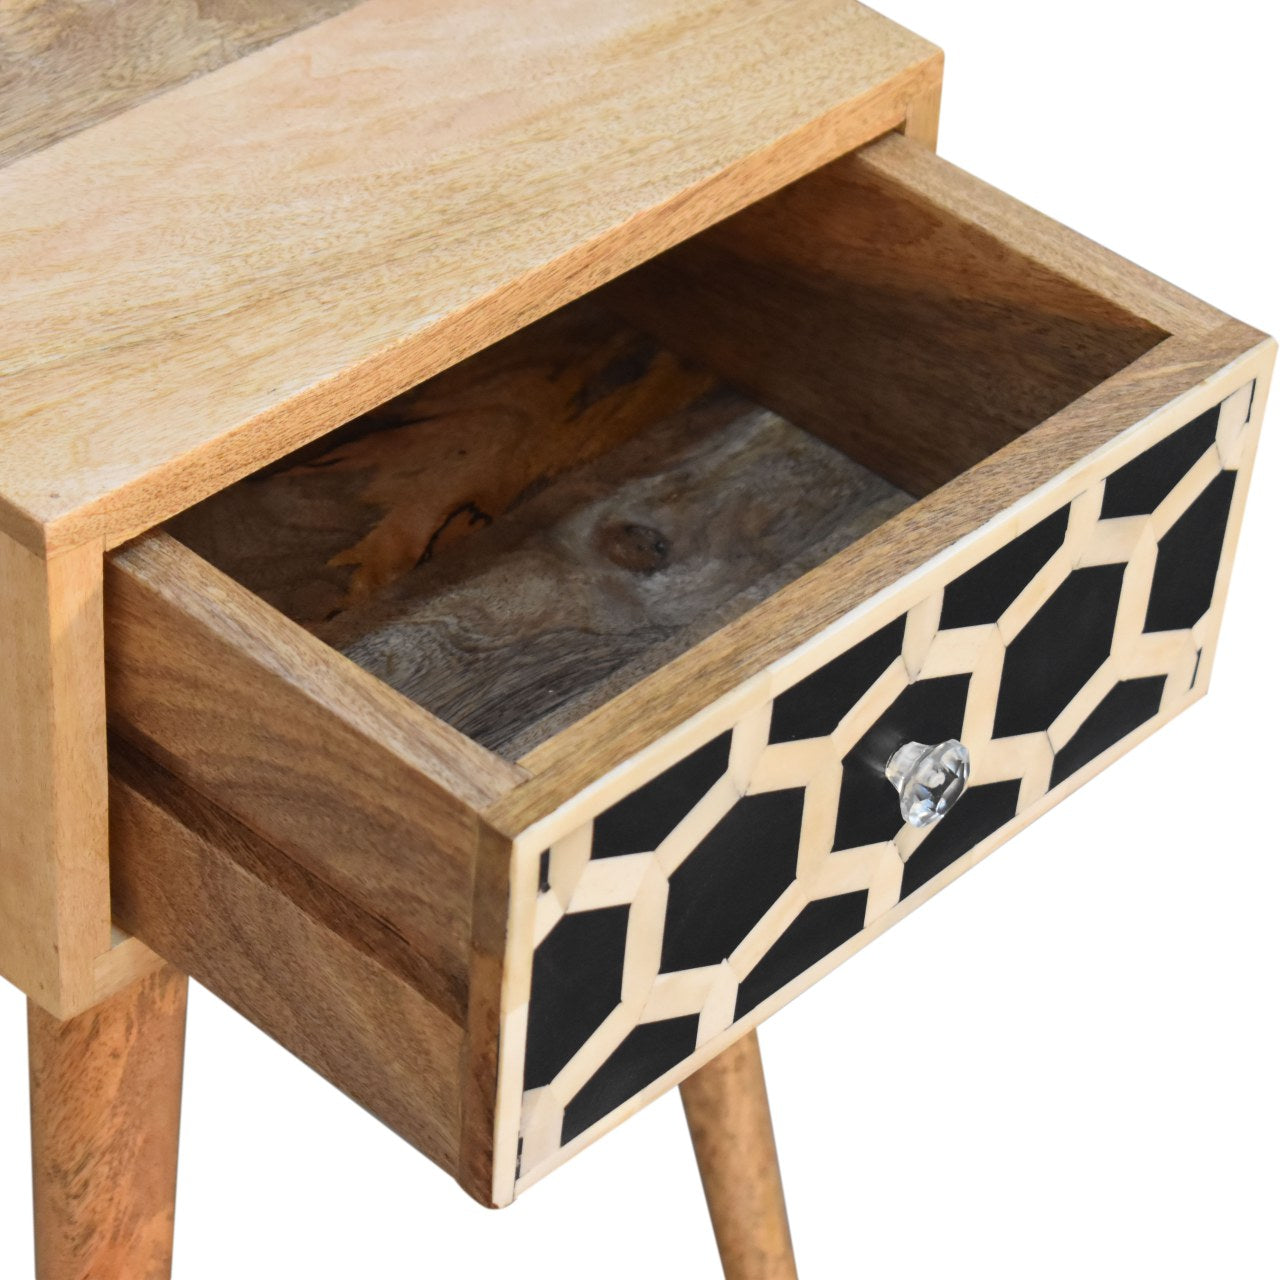 Mini Bone Inlay & Black Ash Oak FInish Bedside Table 1 Drawer Chest - CasaFenix